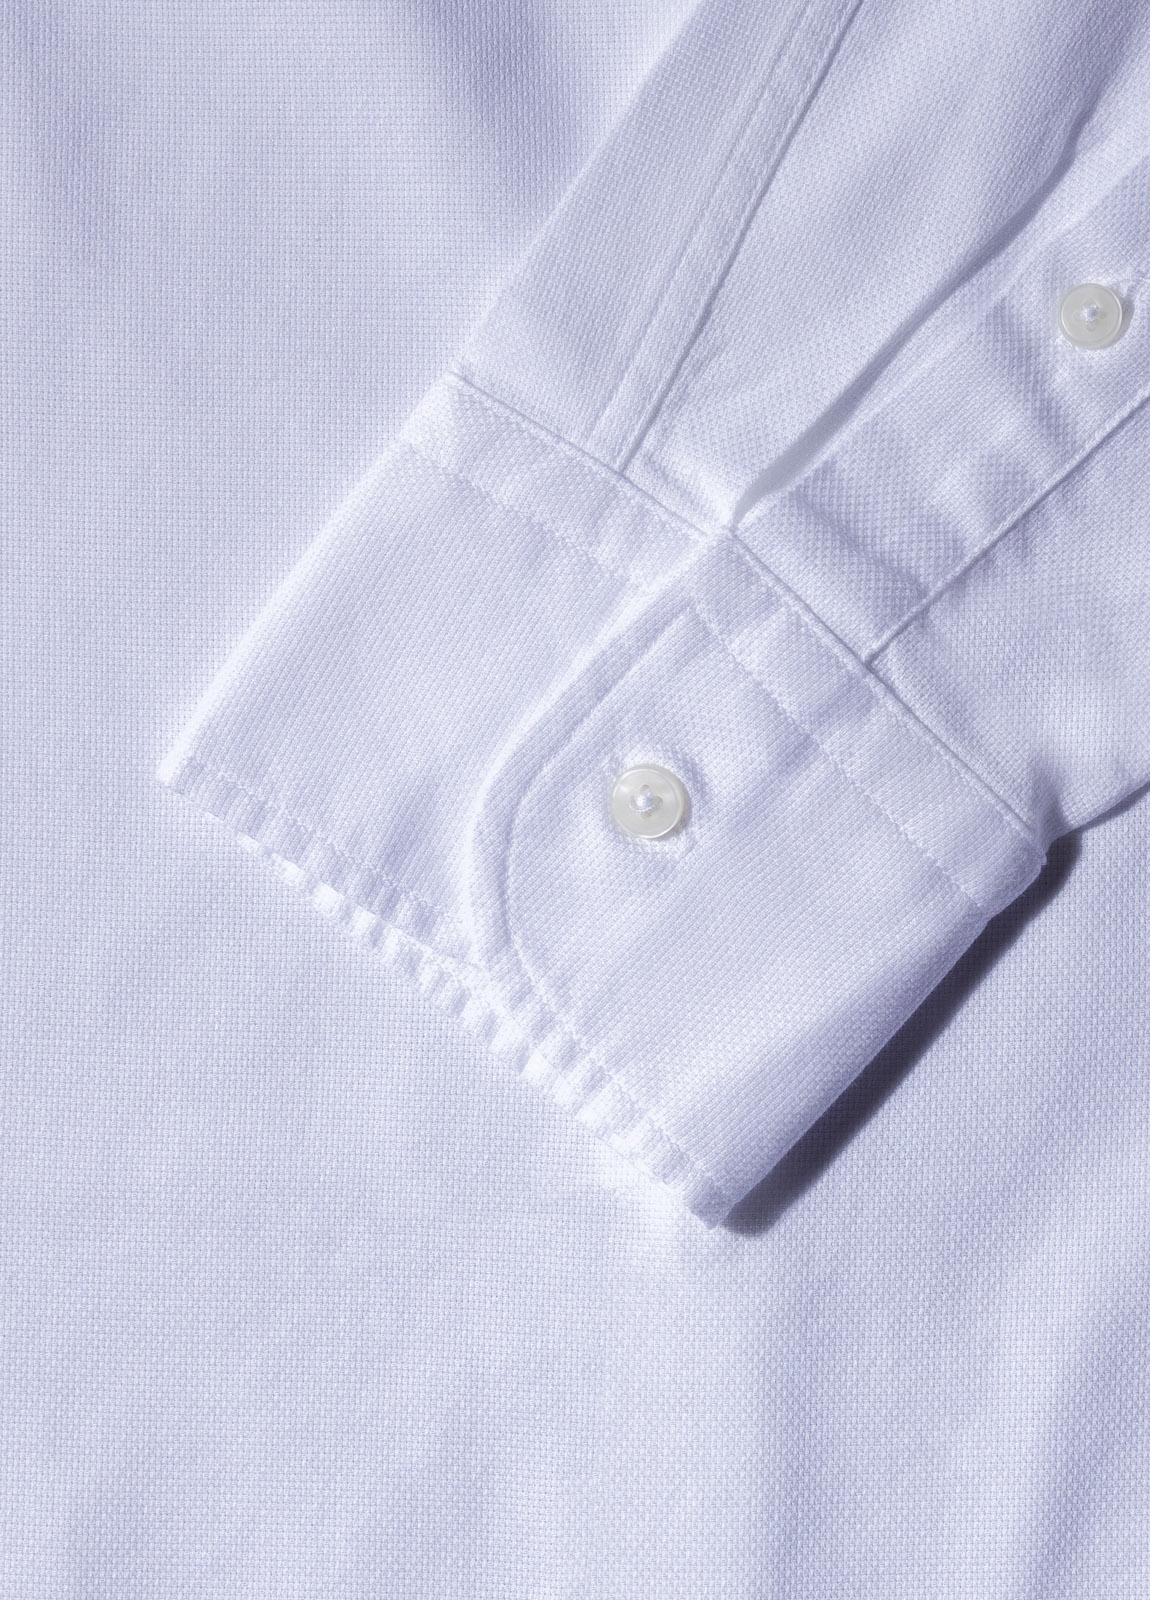 Camisa sport FUREST COLECCION textura blanco - Ítem2